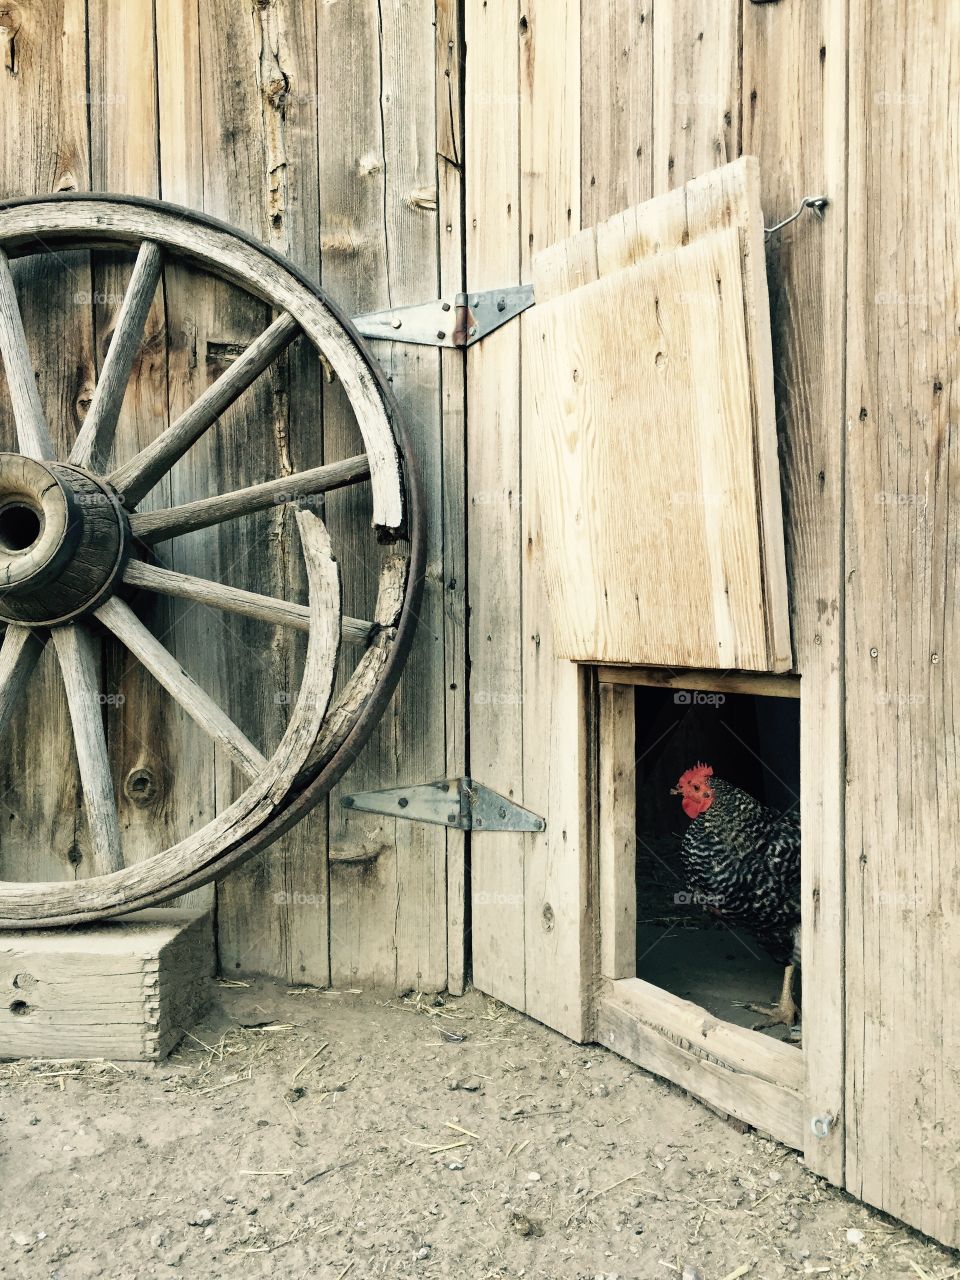 Chicken in a barnyard